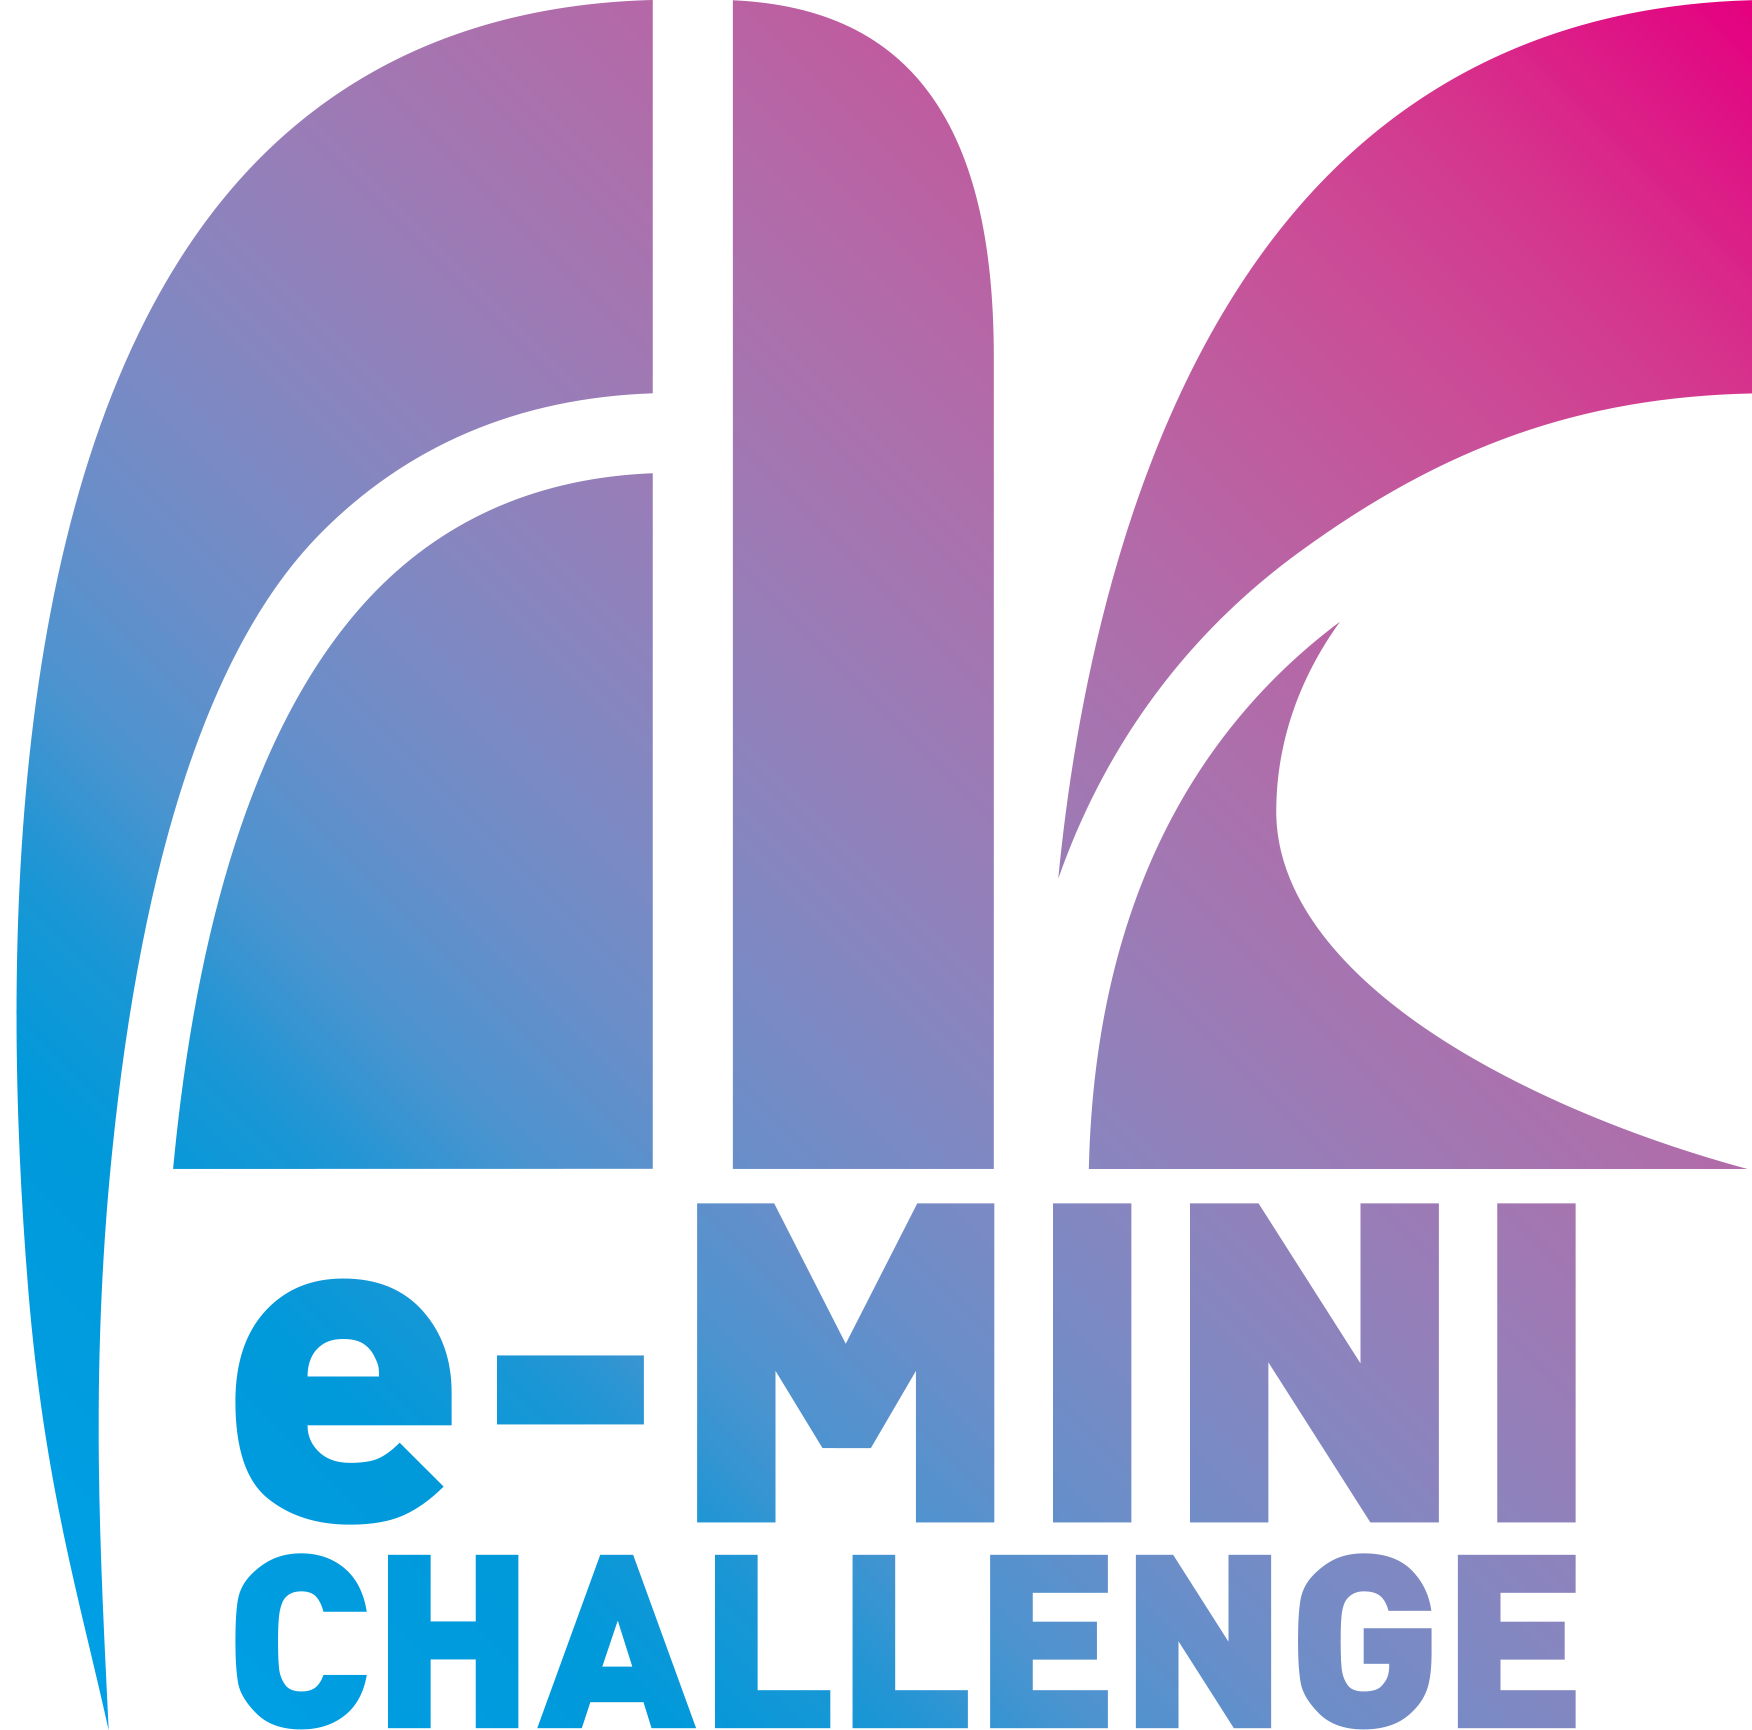 e-MINI CHALLENGE®2022 S2 Rd.8 ポイントランキング公開